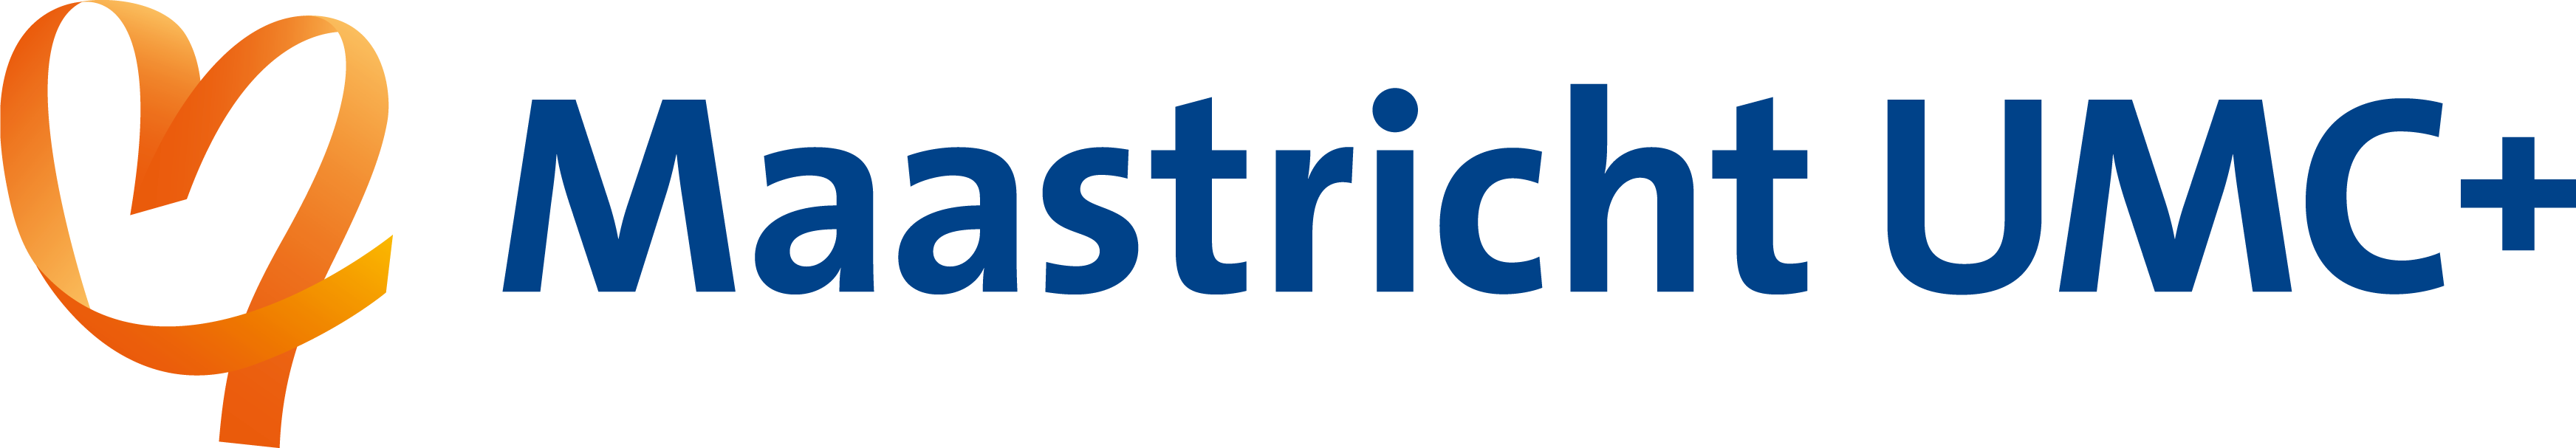 Maastricht UMC - logo